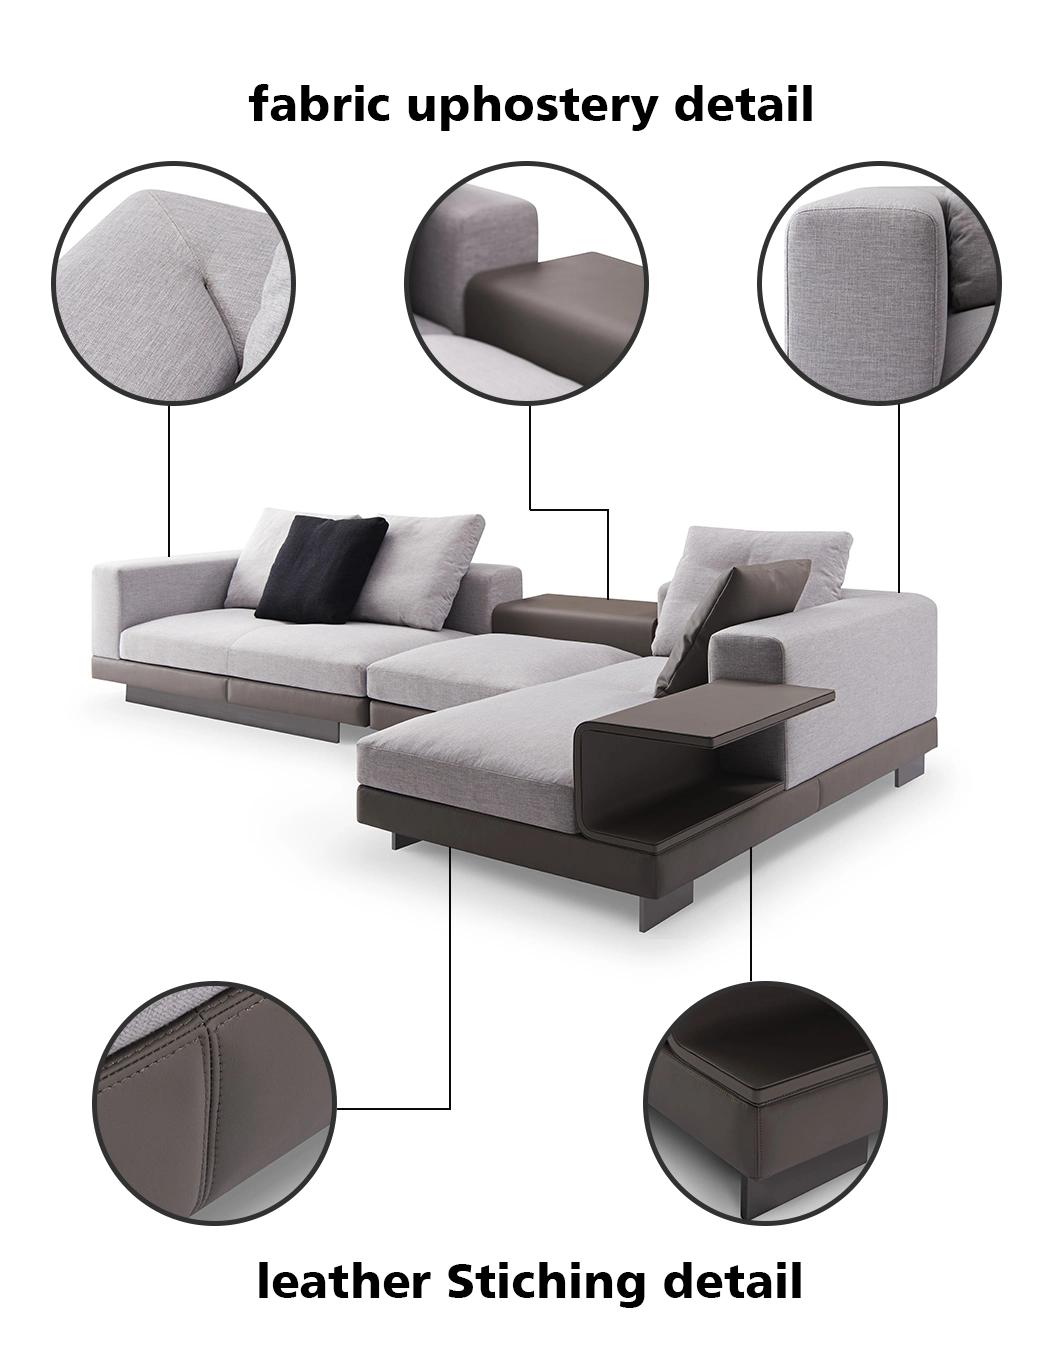 Italian Modern Hotel Home Living Room Furniture Leisure Fabric Leather Sofa Set